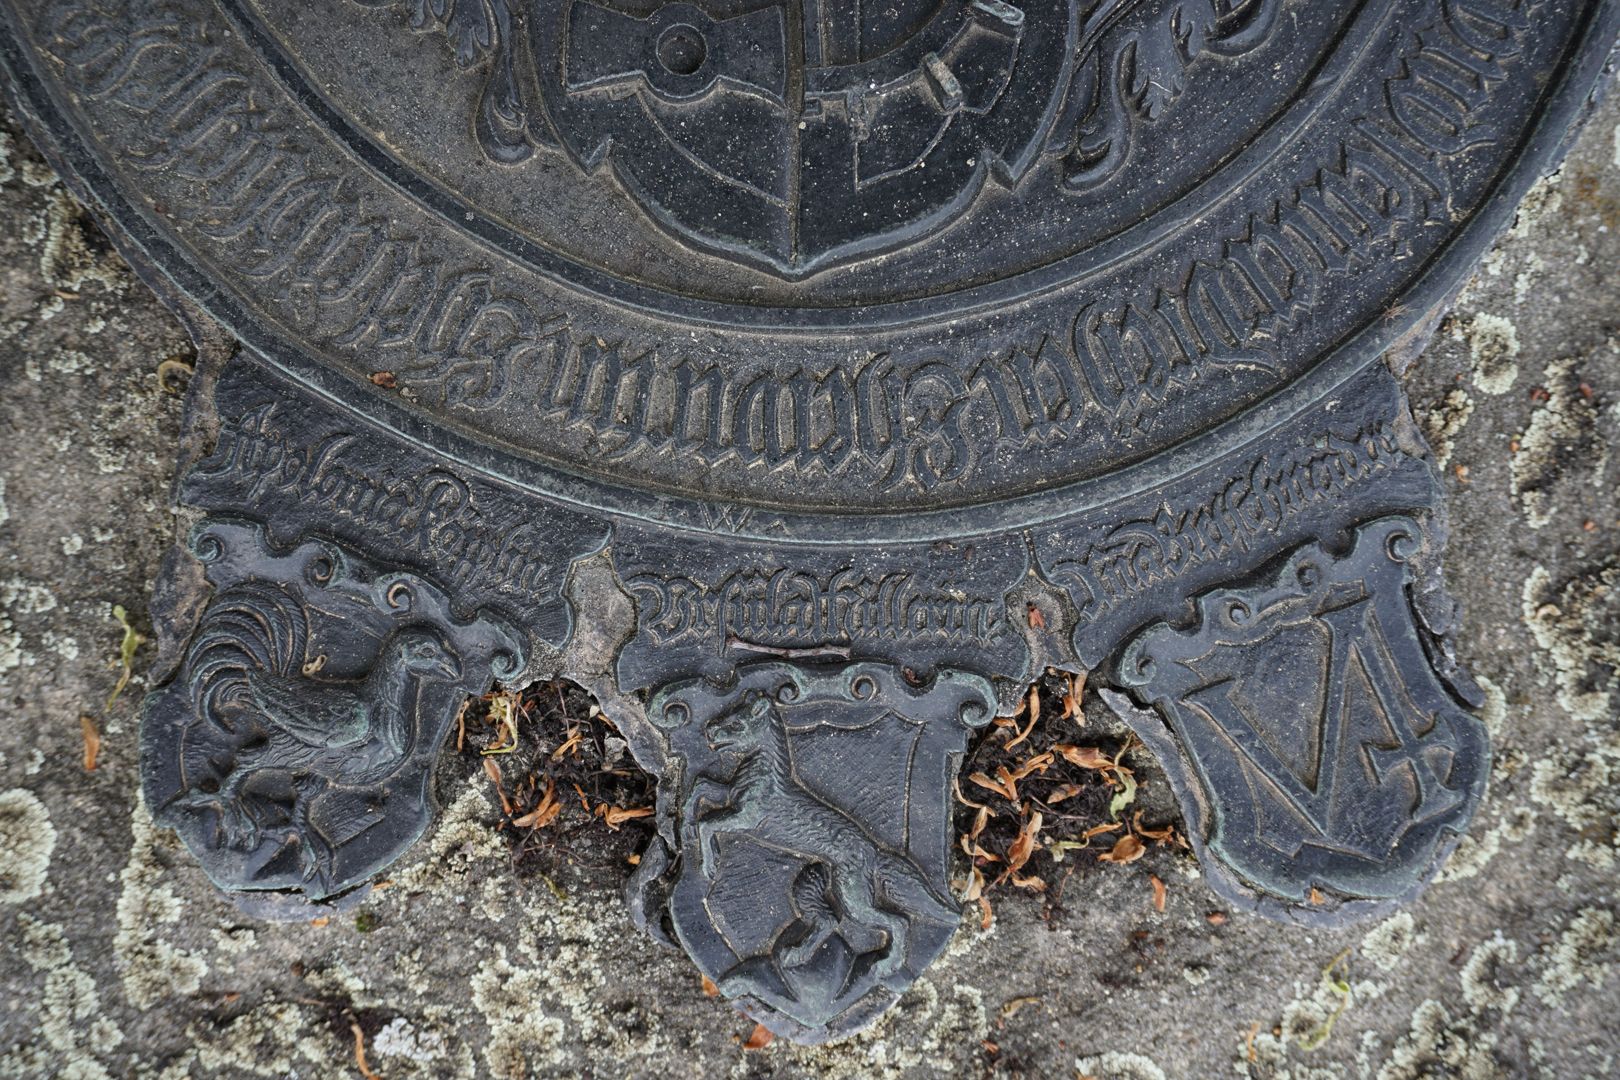 Epitaph of the goldsmith Caspar Beutmüller Three coats of arms: Apolonia Köpplin with Kopp- or Kapphuhn / Ursula Millerin with a fox / Anna Bretschneiderin with sign